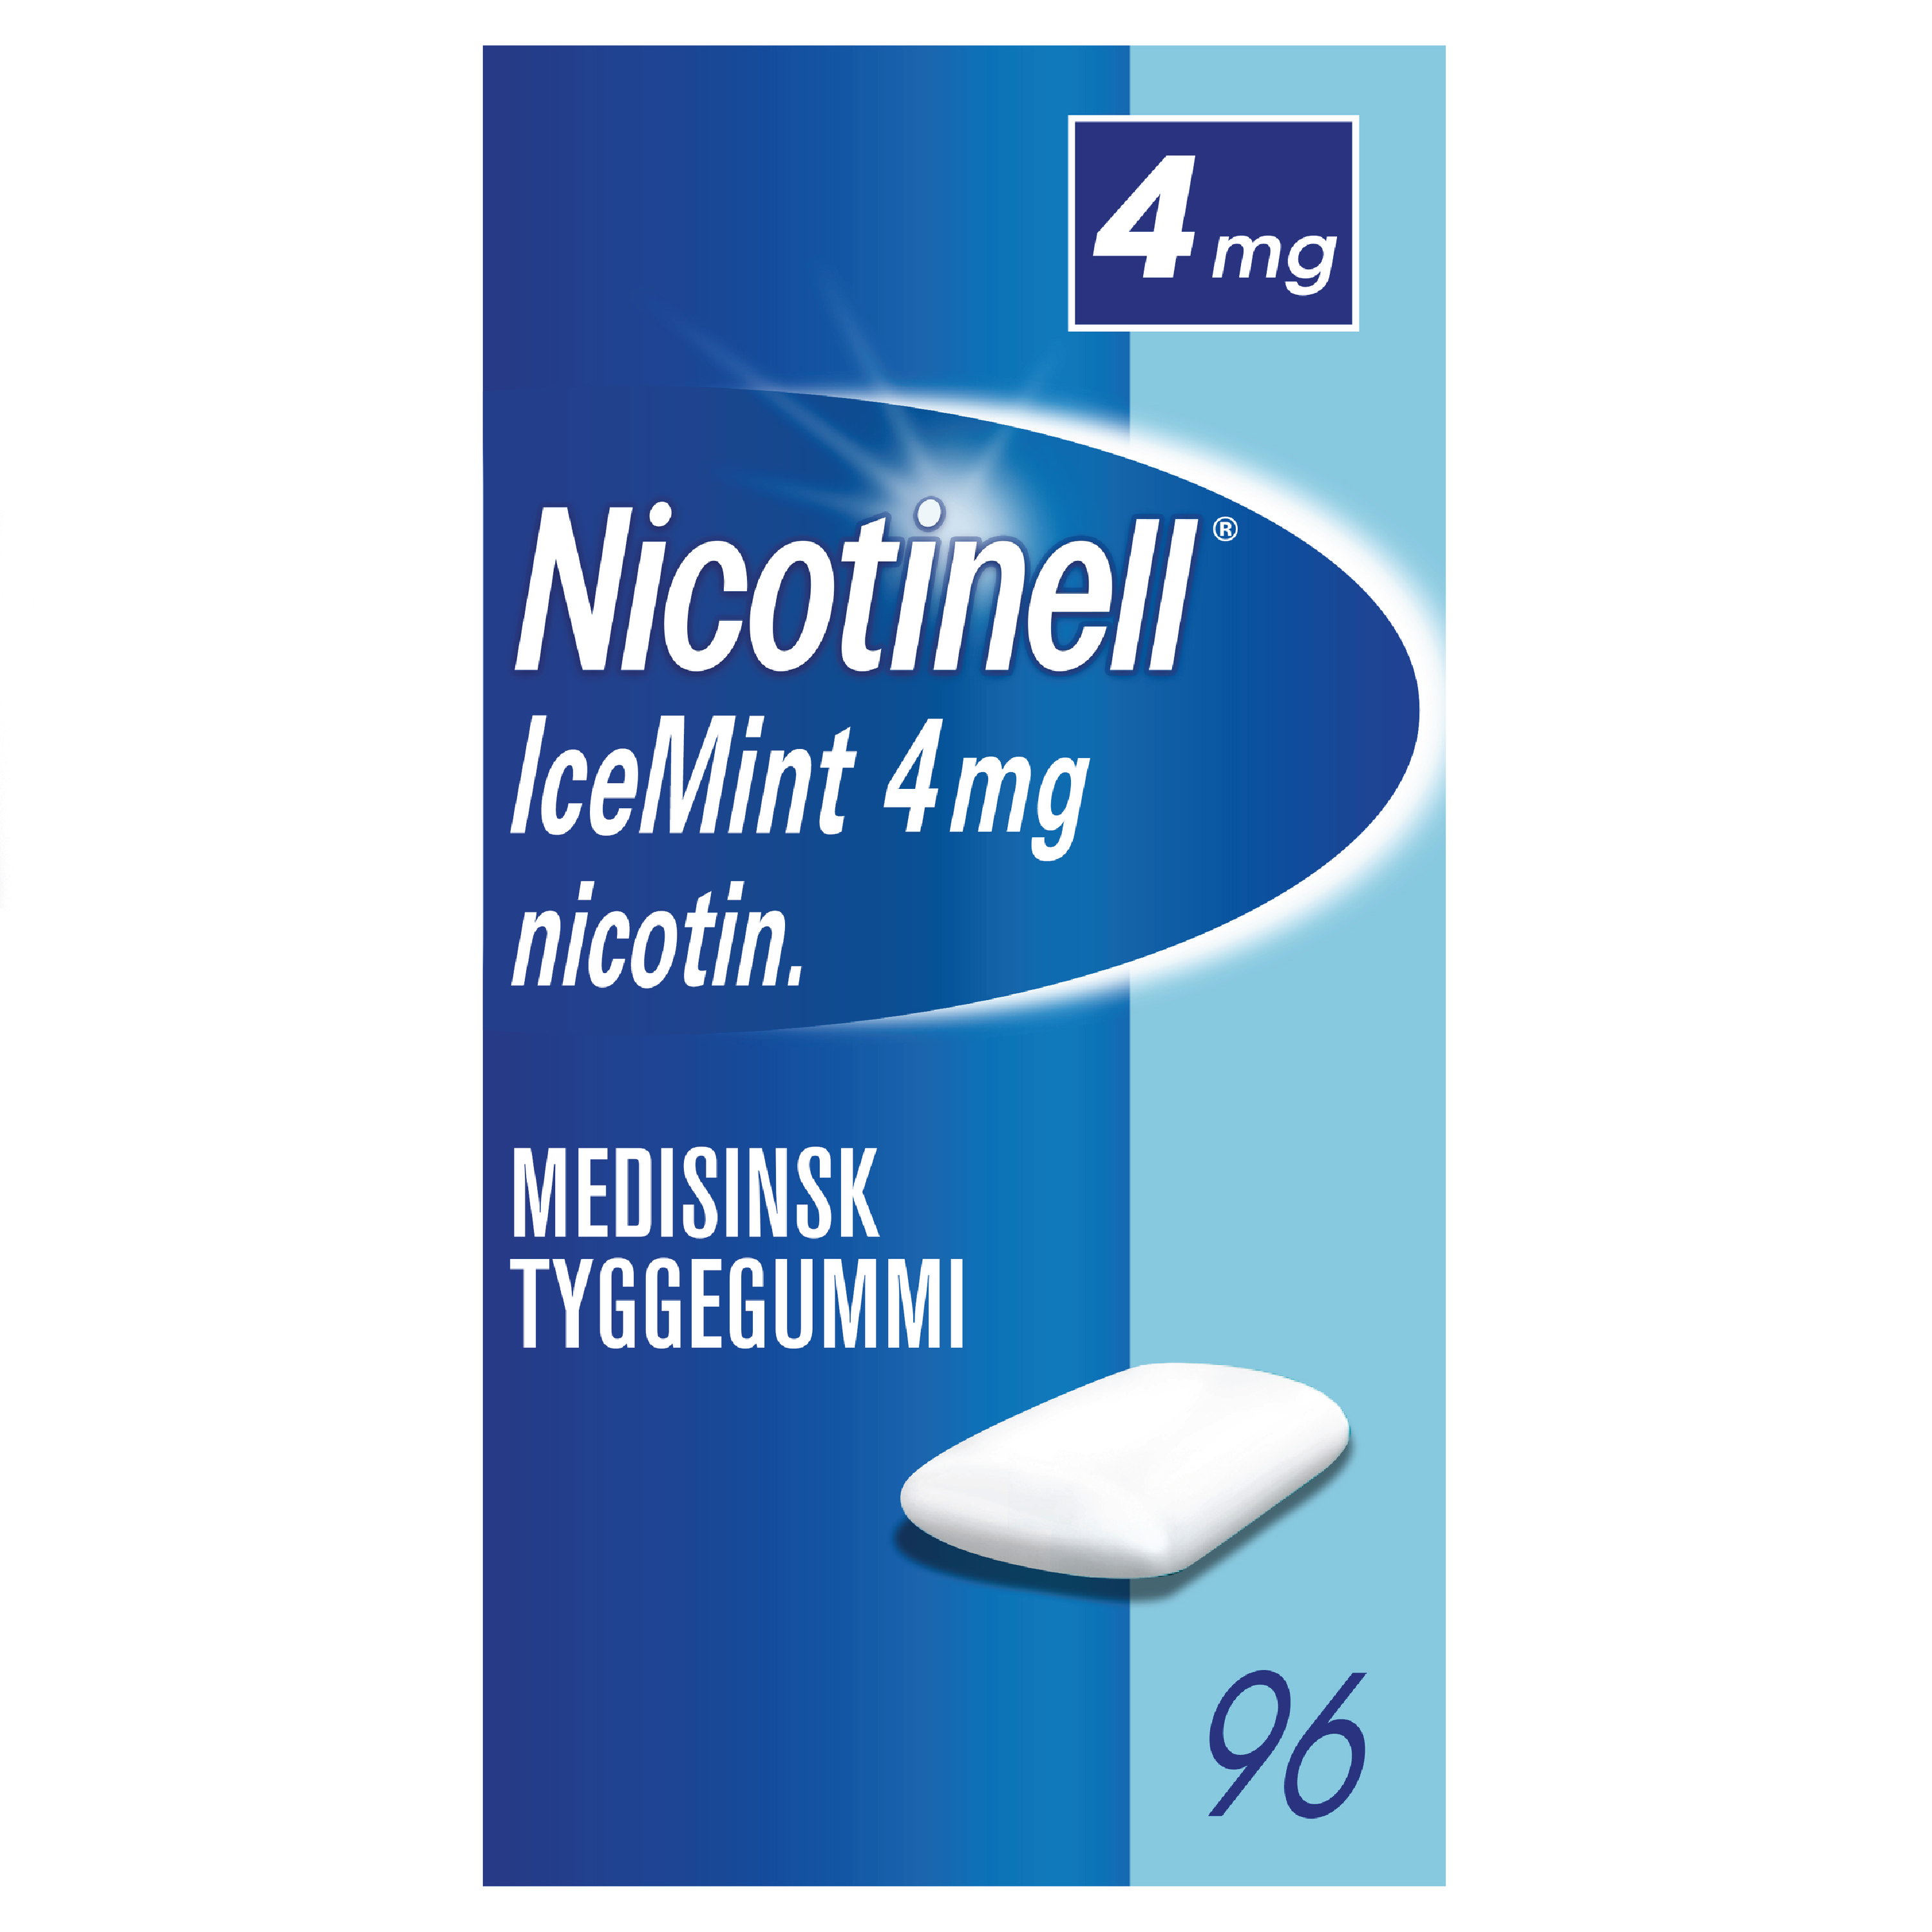 Nicotinell Tyggegummi 4mg icemint, Slutte å røyke,  96 stk.